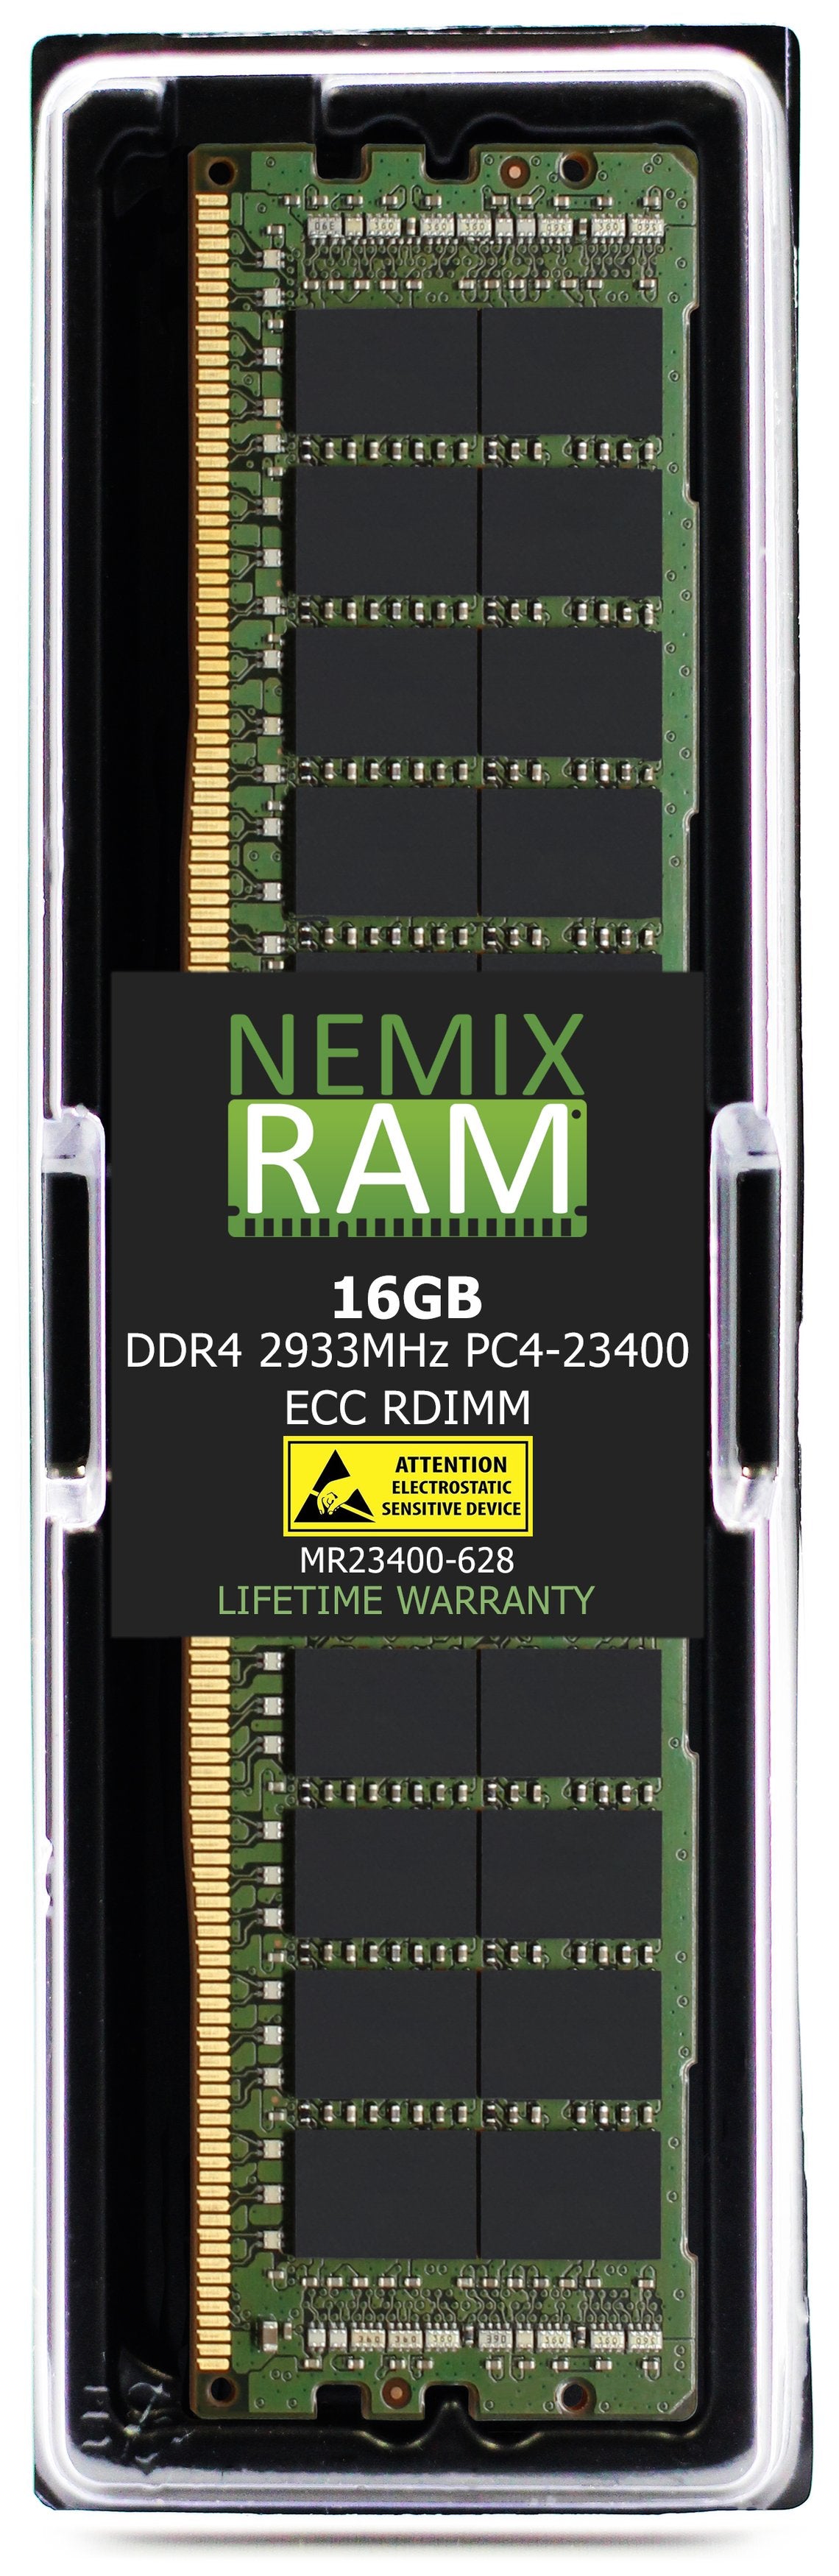 16GB DDR4 2933MHZ PC4-23400 RDIMM Compatible with Supermicro MEM-DR416L-HL04-ER29